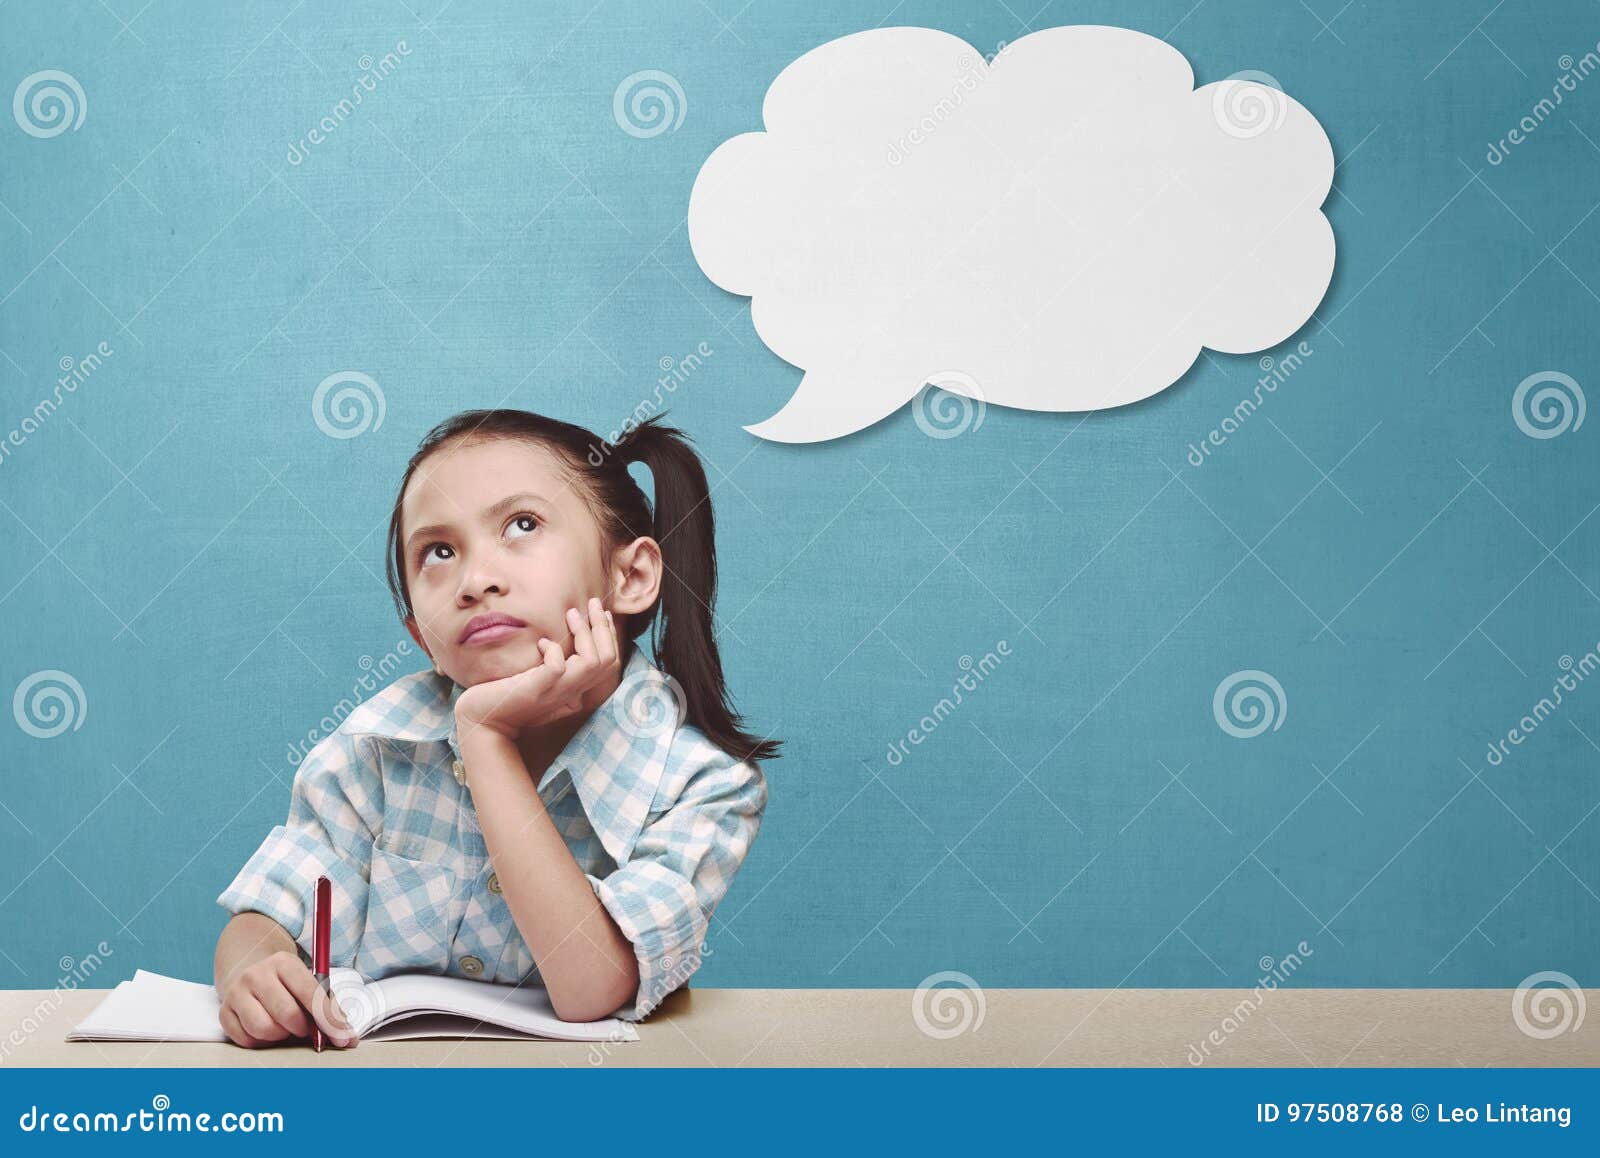 Beautiful Asian Child Thinking a New Idea Stock Photo - Image of ...